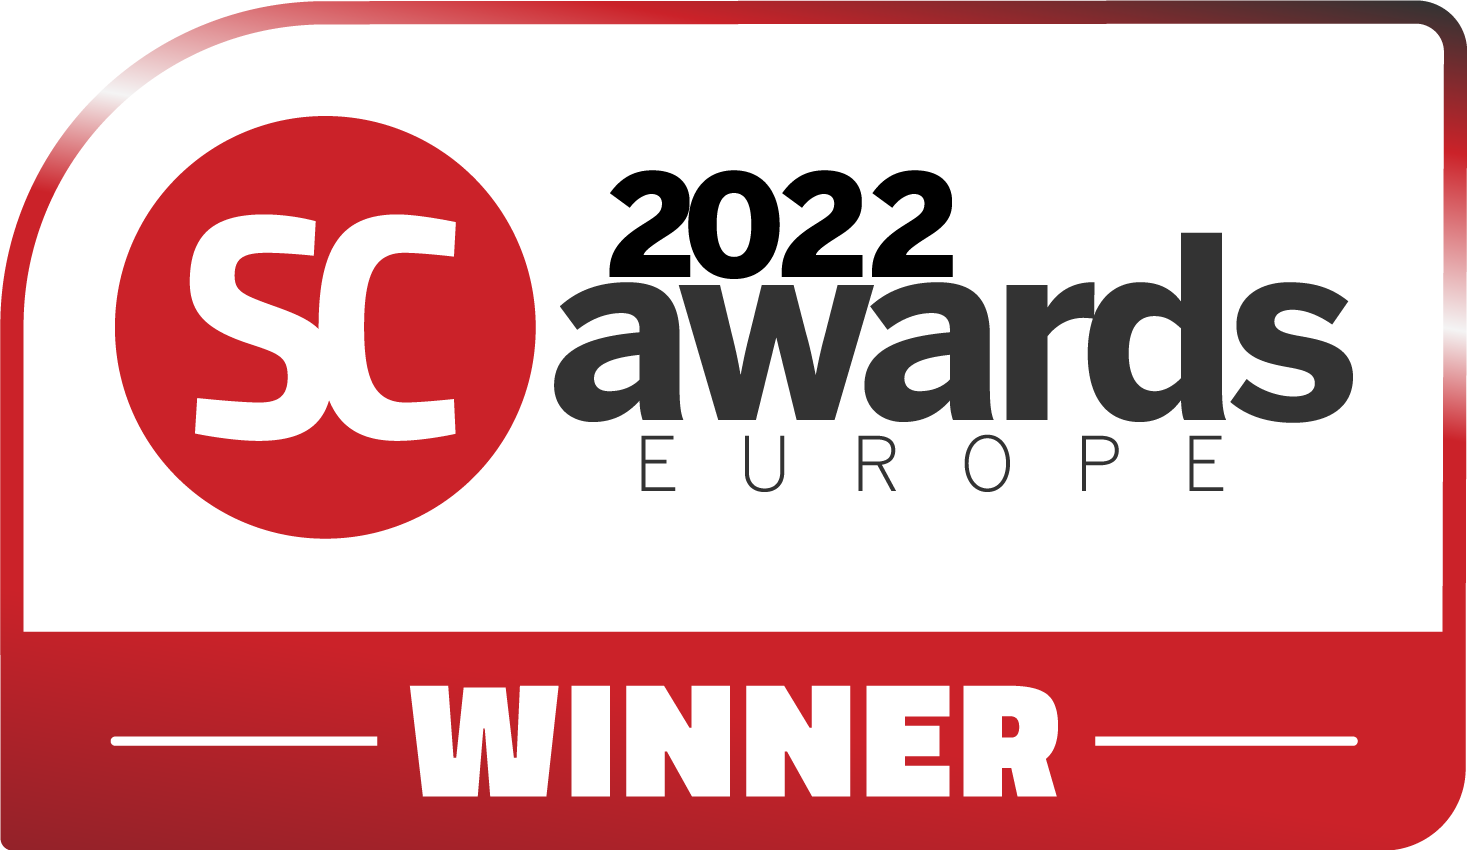 Best Customer Service, SC Awards Europe 2022